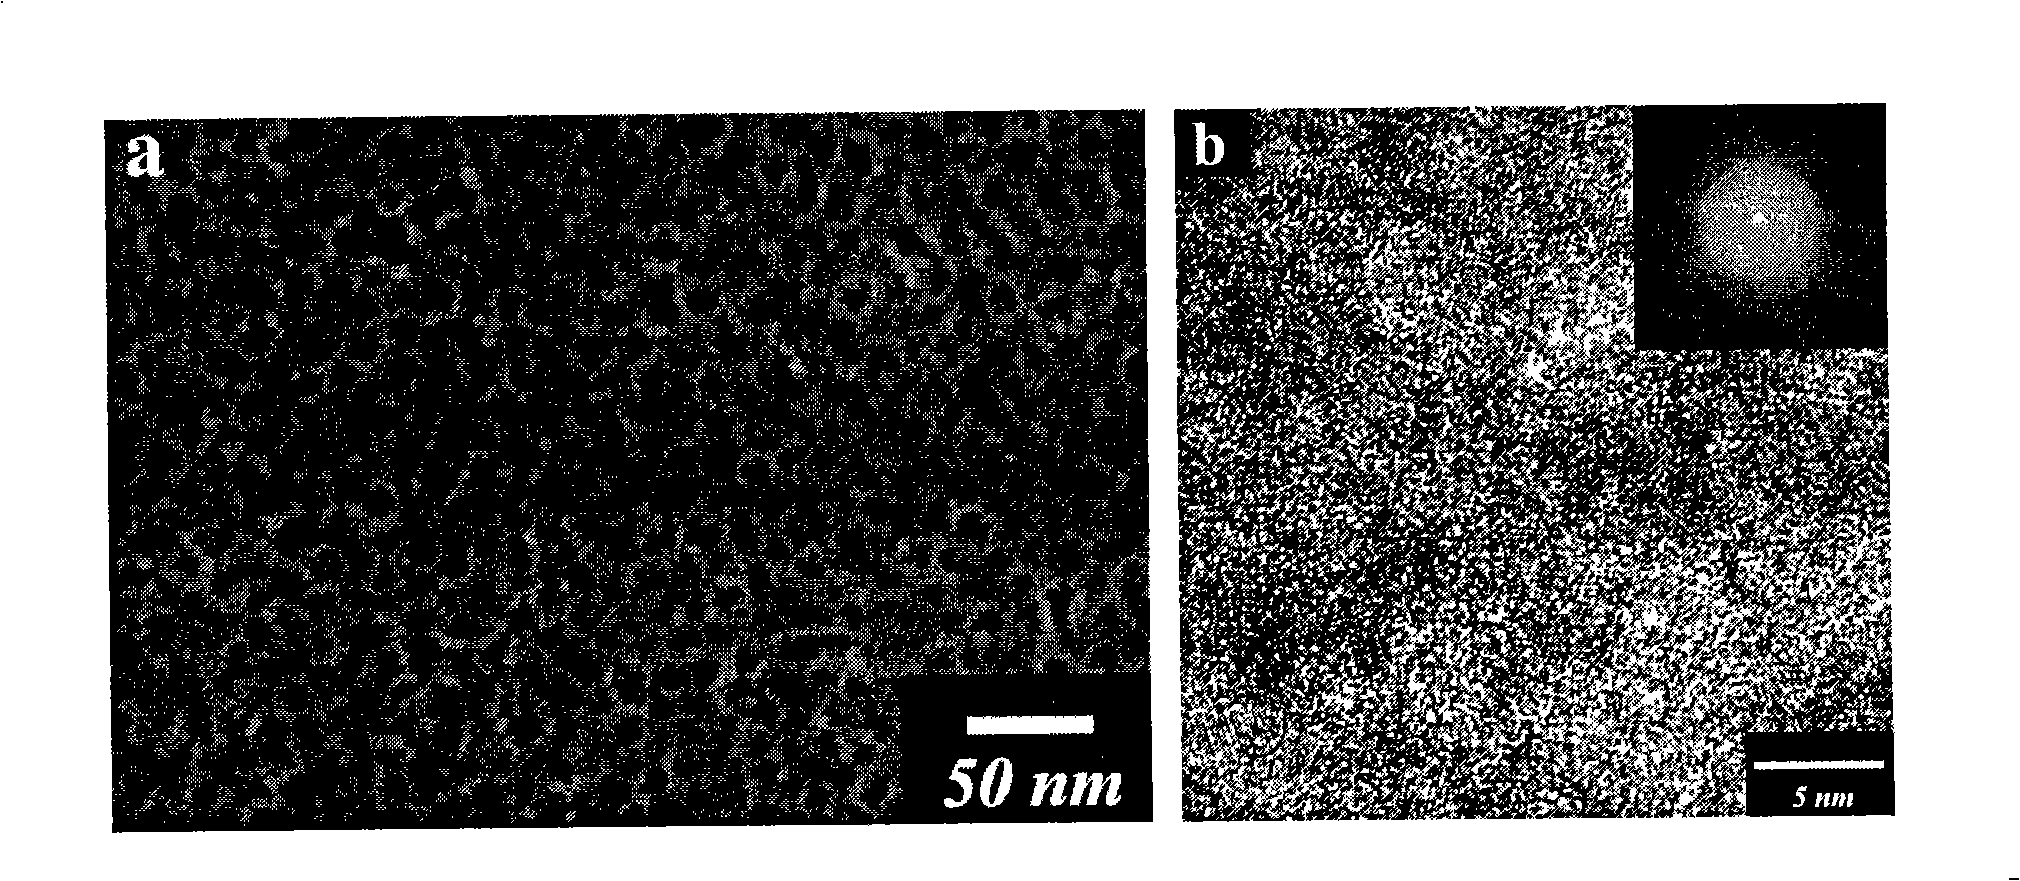 Mesopore titanic oxide /zinc oxide composite film preparation method